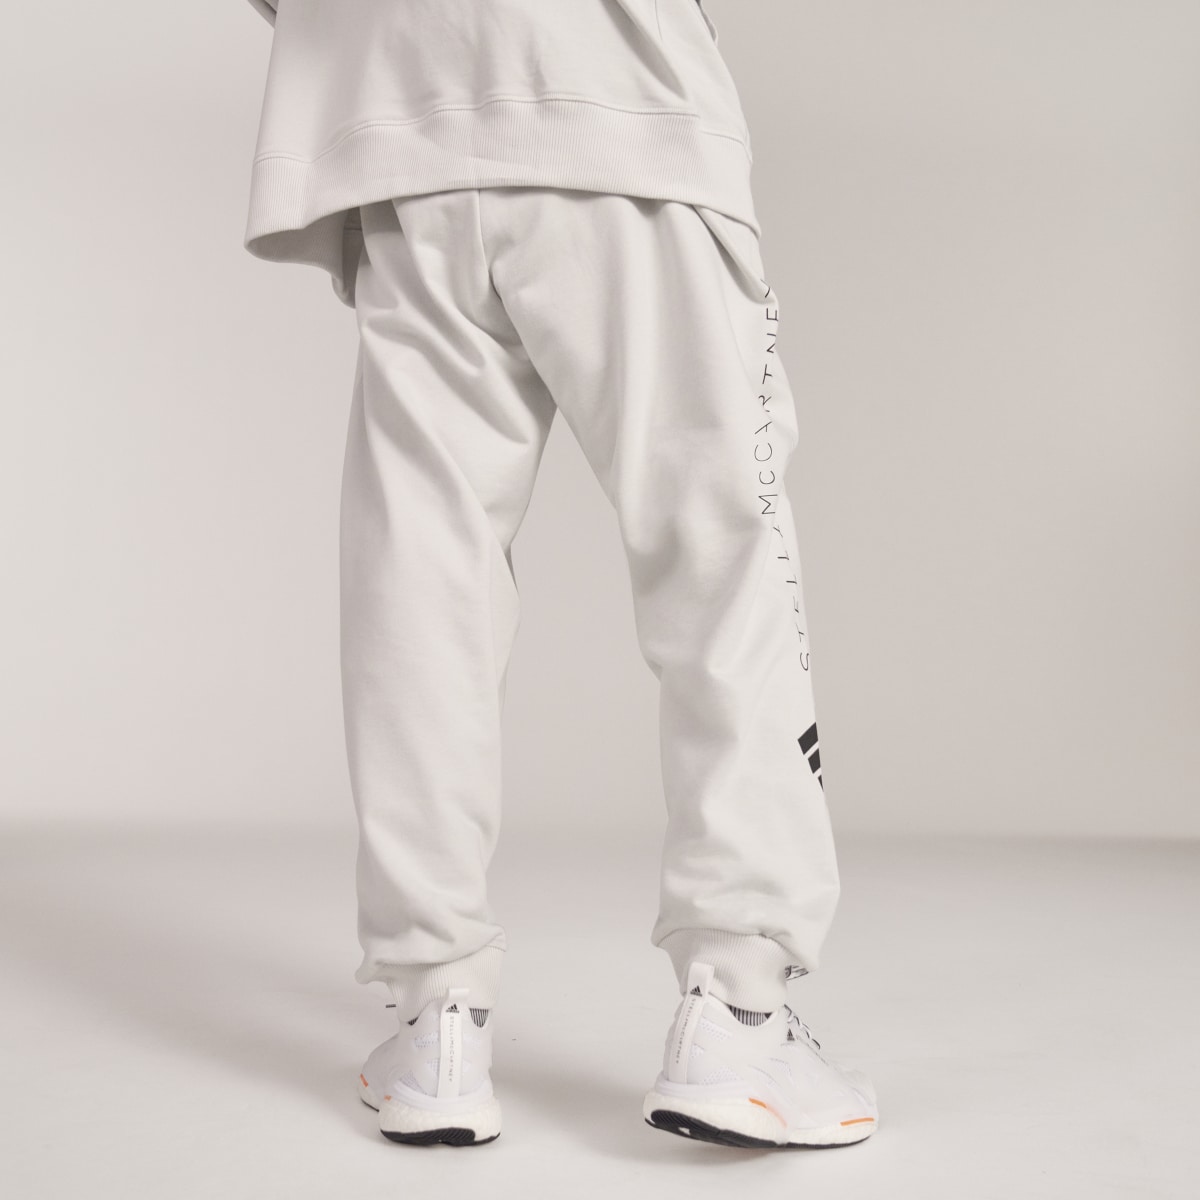 Adidas by Stella McCartney Sportswear Regenerated Cellulose Hose – Genderneutral. 4